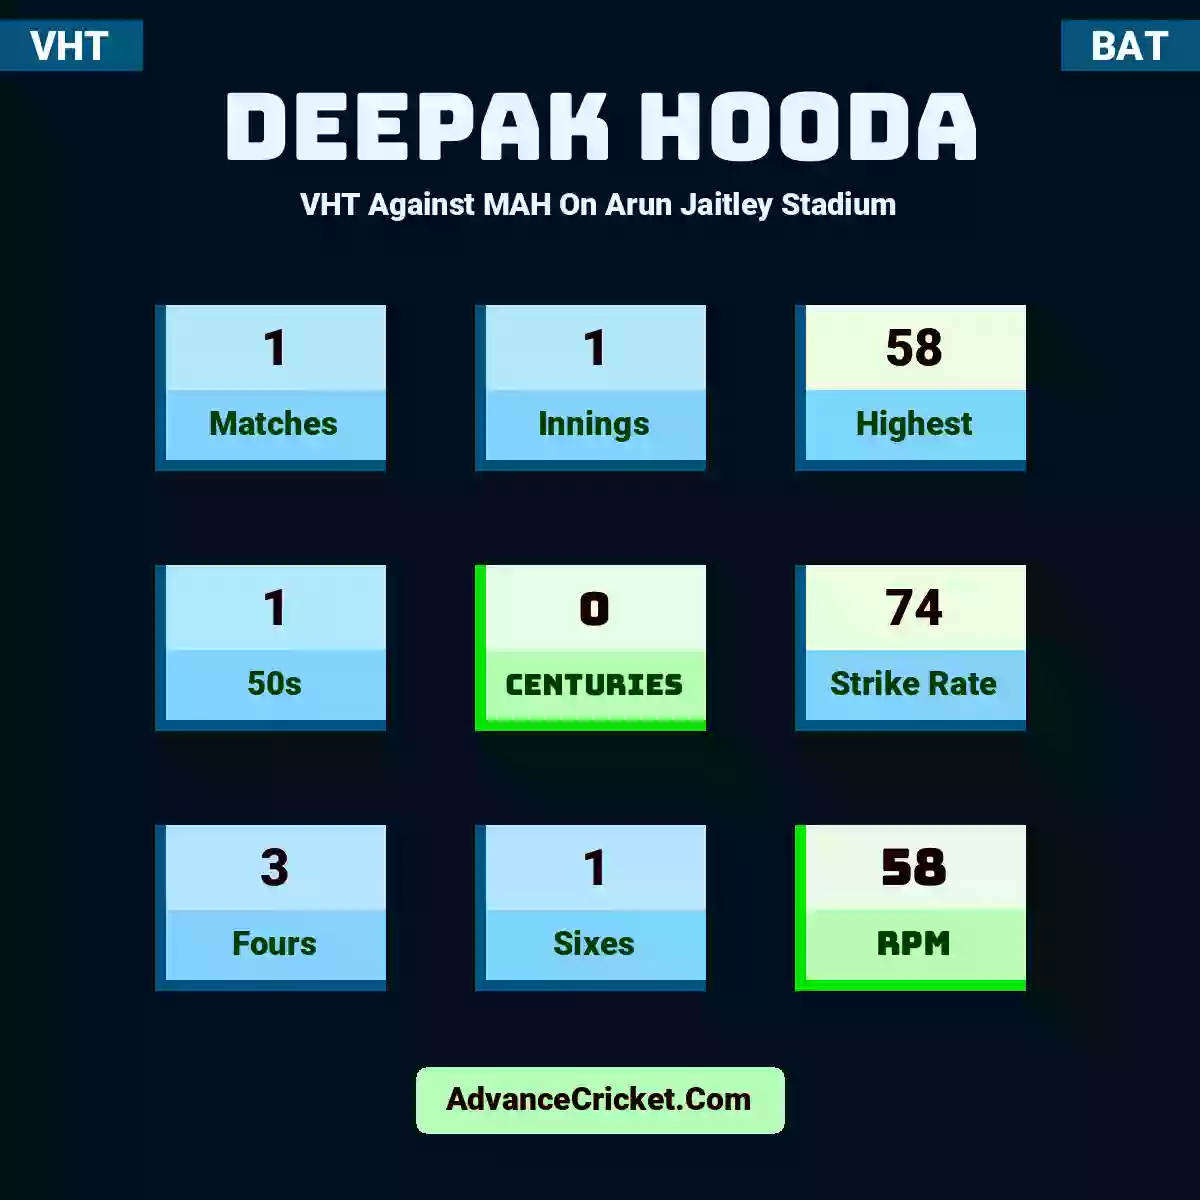 Deepak Hooda VHT  Against MAH On Arun Jaitley Stadium, Deepak Hooda played 1 matches, scored 58 runs as highest, 1 half-centuries, and 0 centuries, with a strike rate of 74. D.Hooda hit 3 fours and 1 sixes, with an RPM of 58.